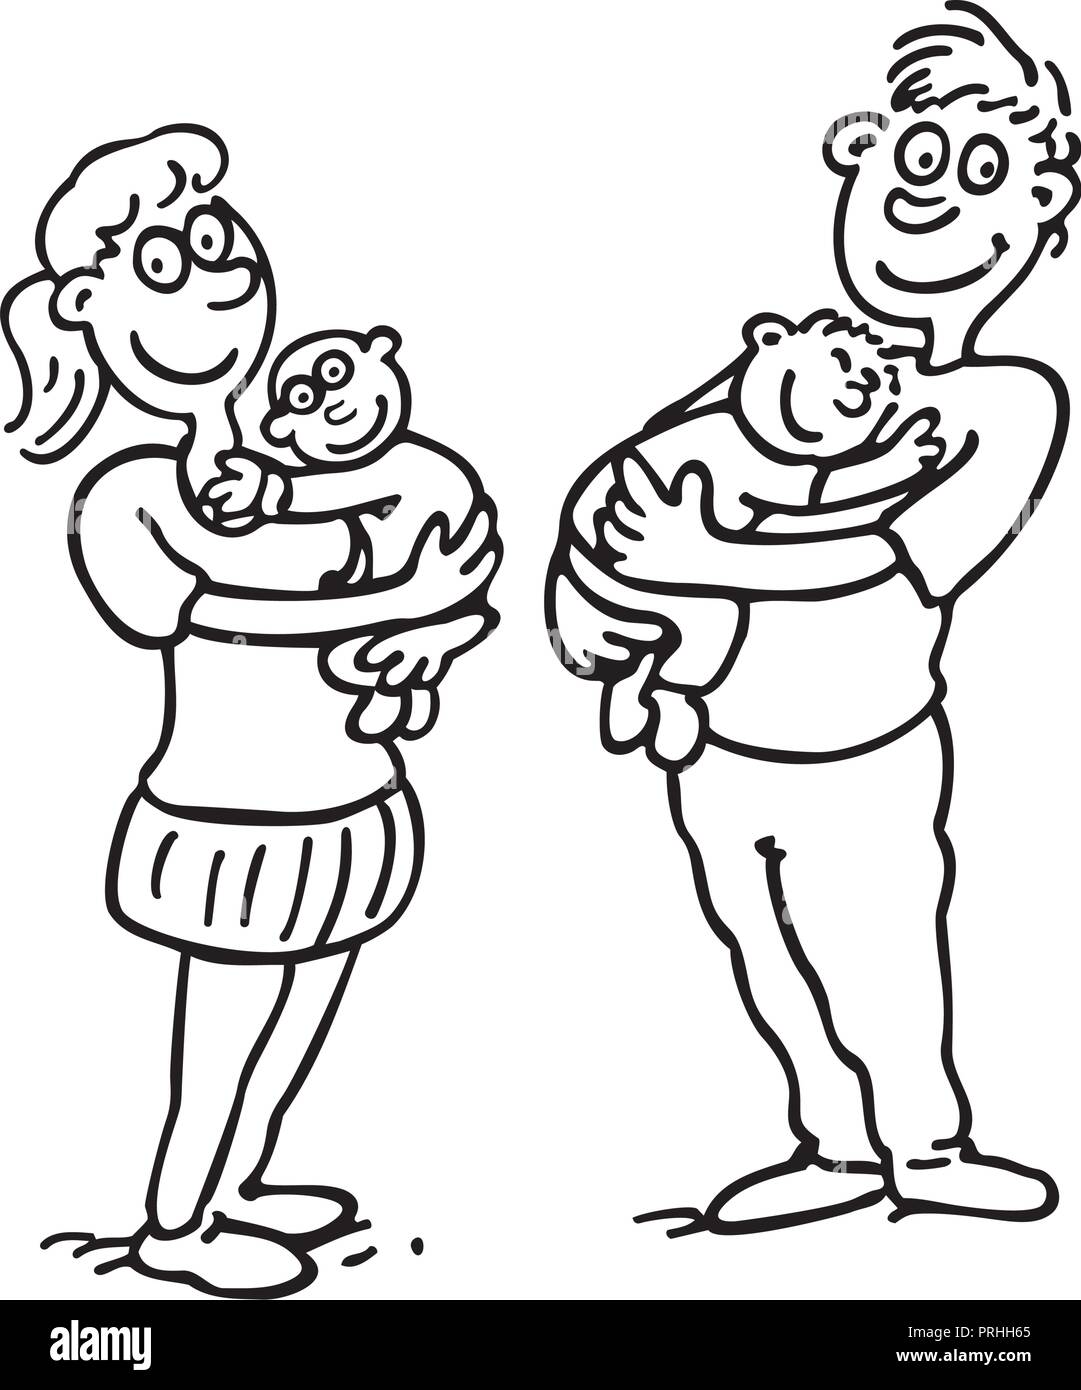 Mama Papa Mantenga Bebe Esbozado Caricatura Dibujo Boceto Ilustracion Vectorial Imagen Vector De Stock Alamy